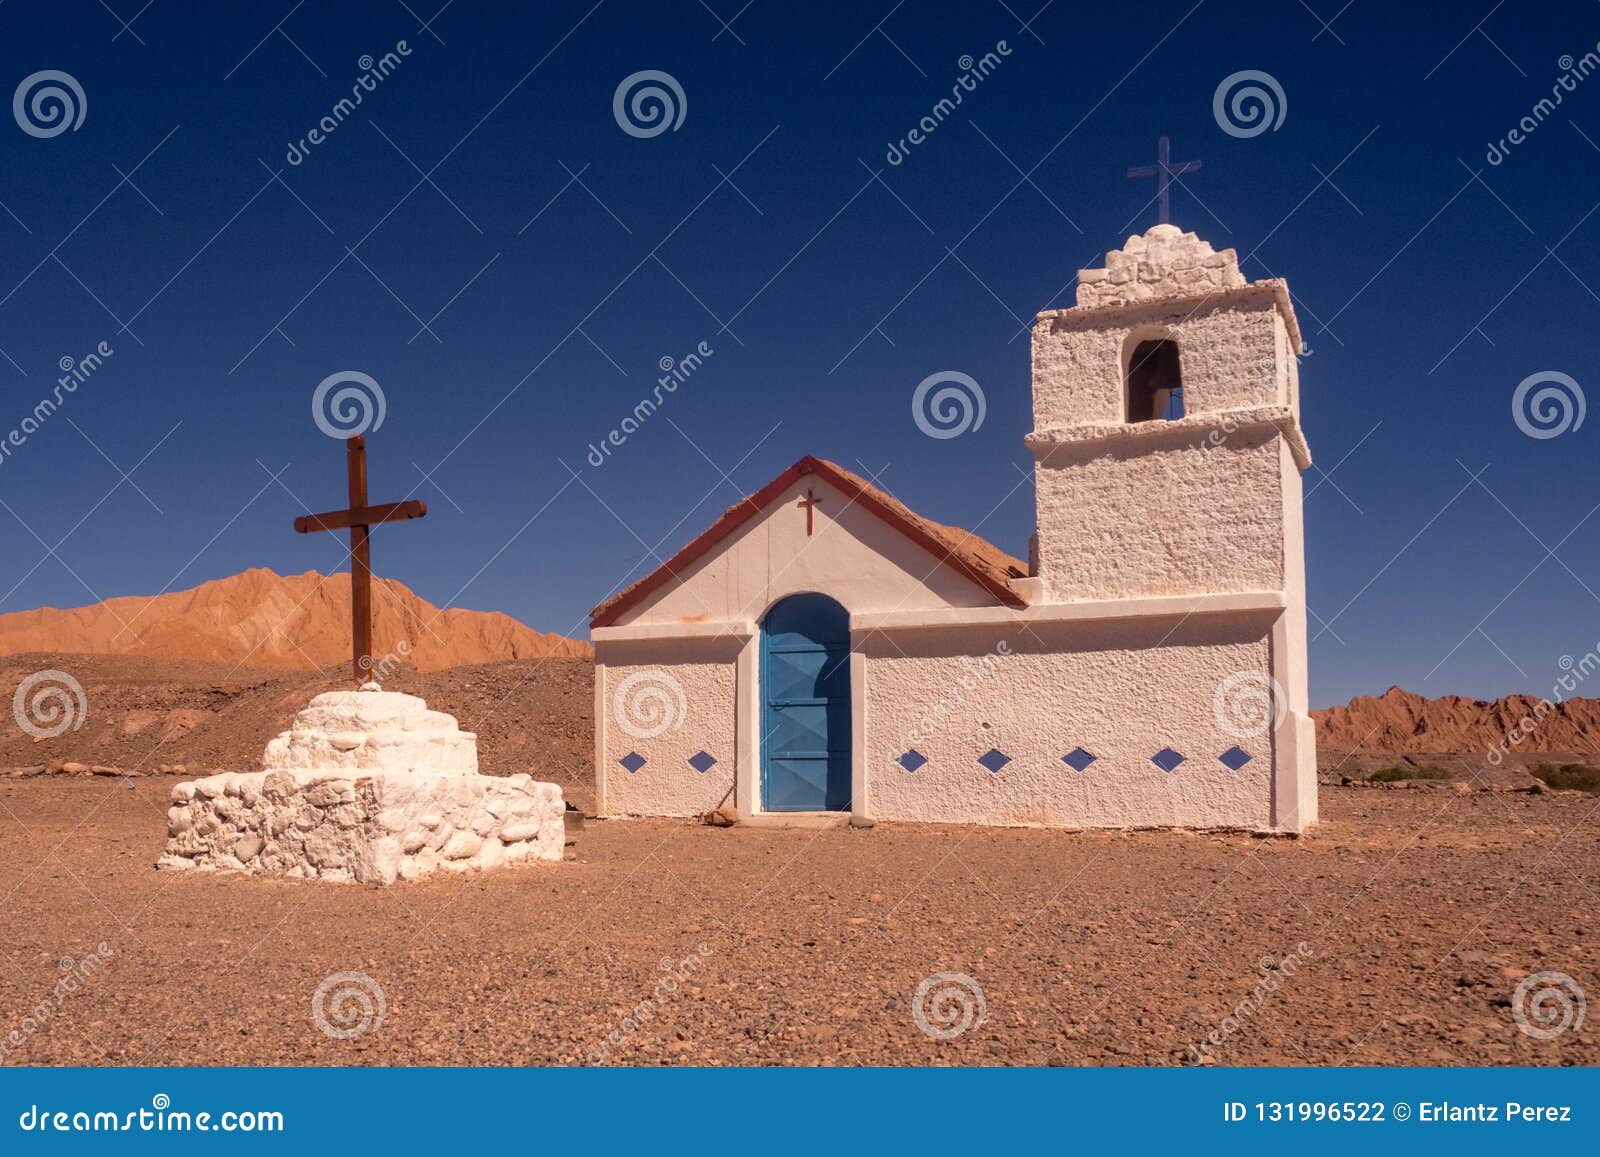 chapel of san isidro in the atacama desert near san pedro, chile